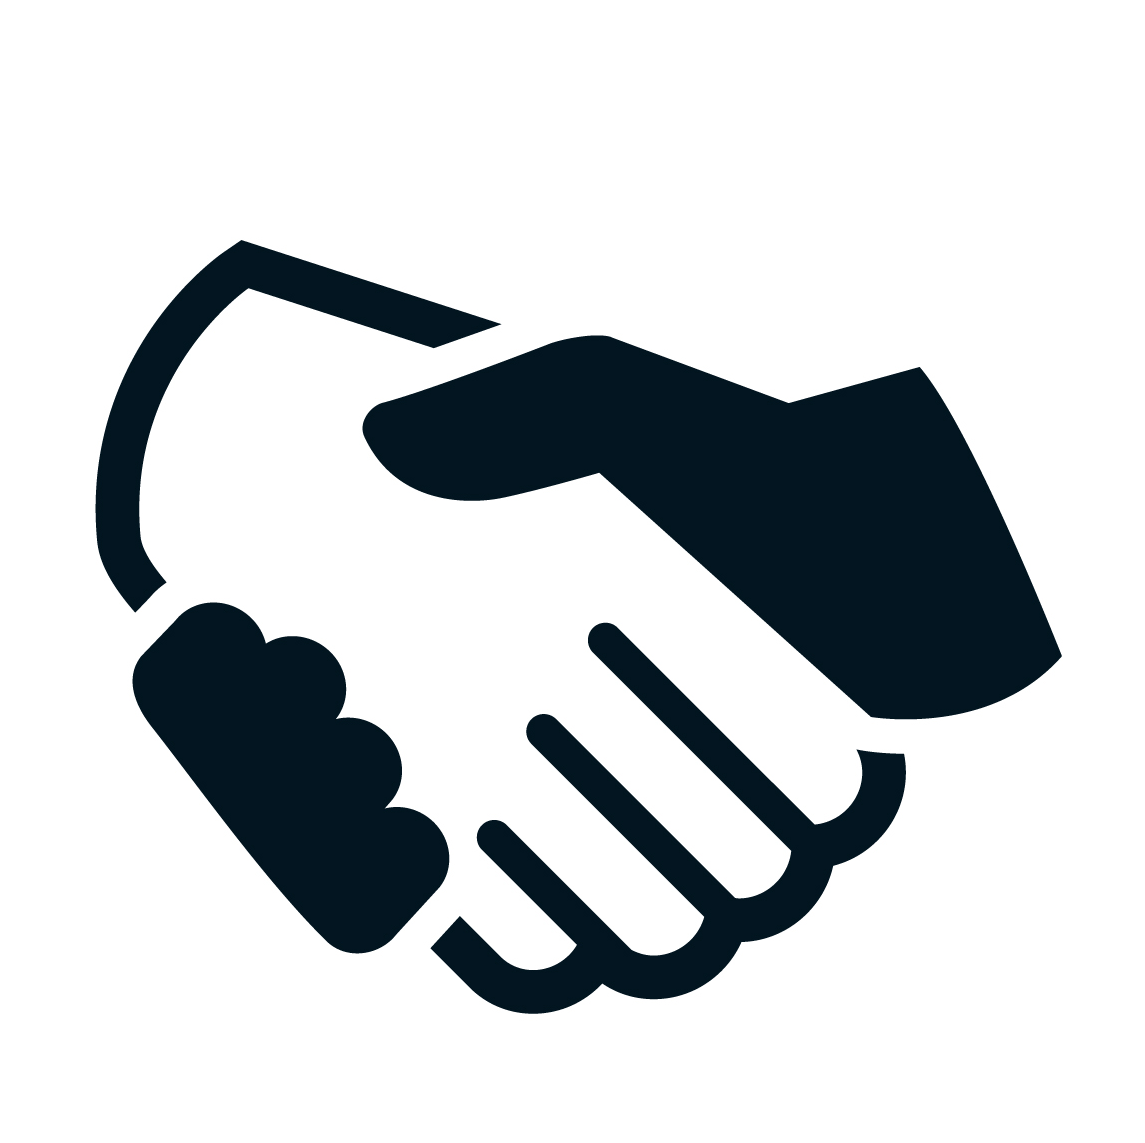 Handshake Logo - Example for the handshake icon element of the logo. CAT 1